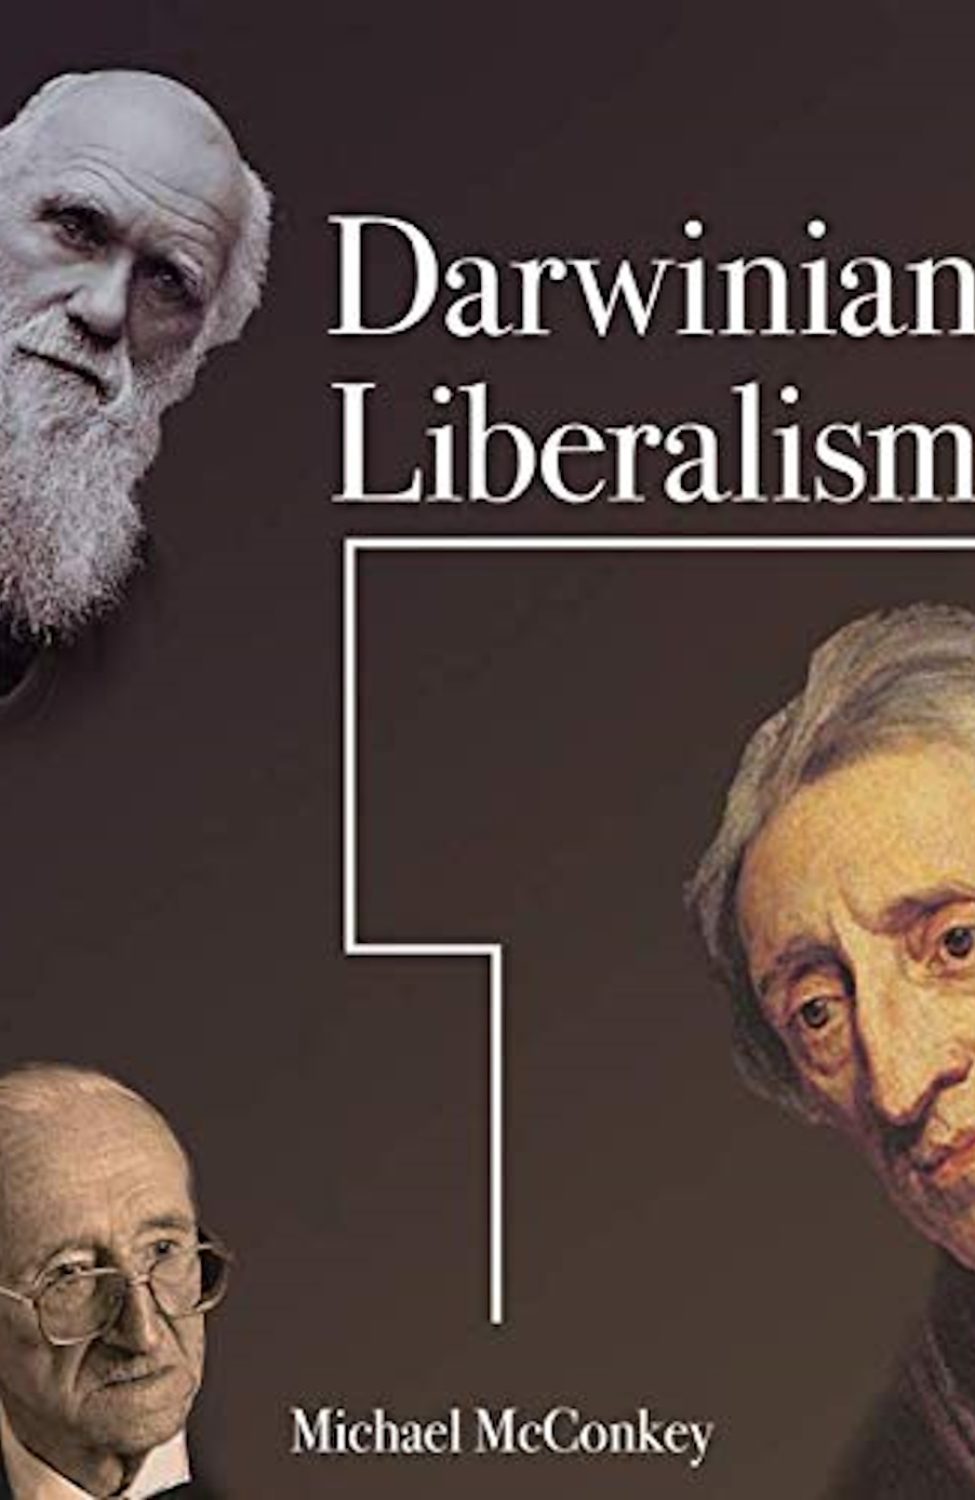 Darwinian Liberalism